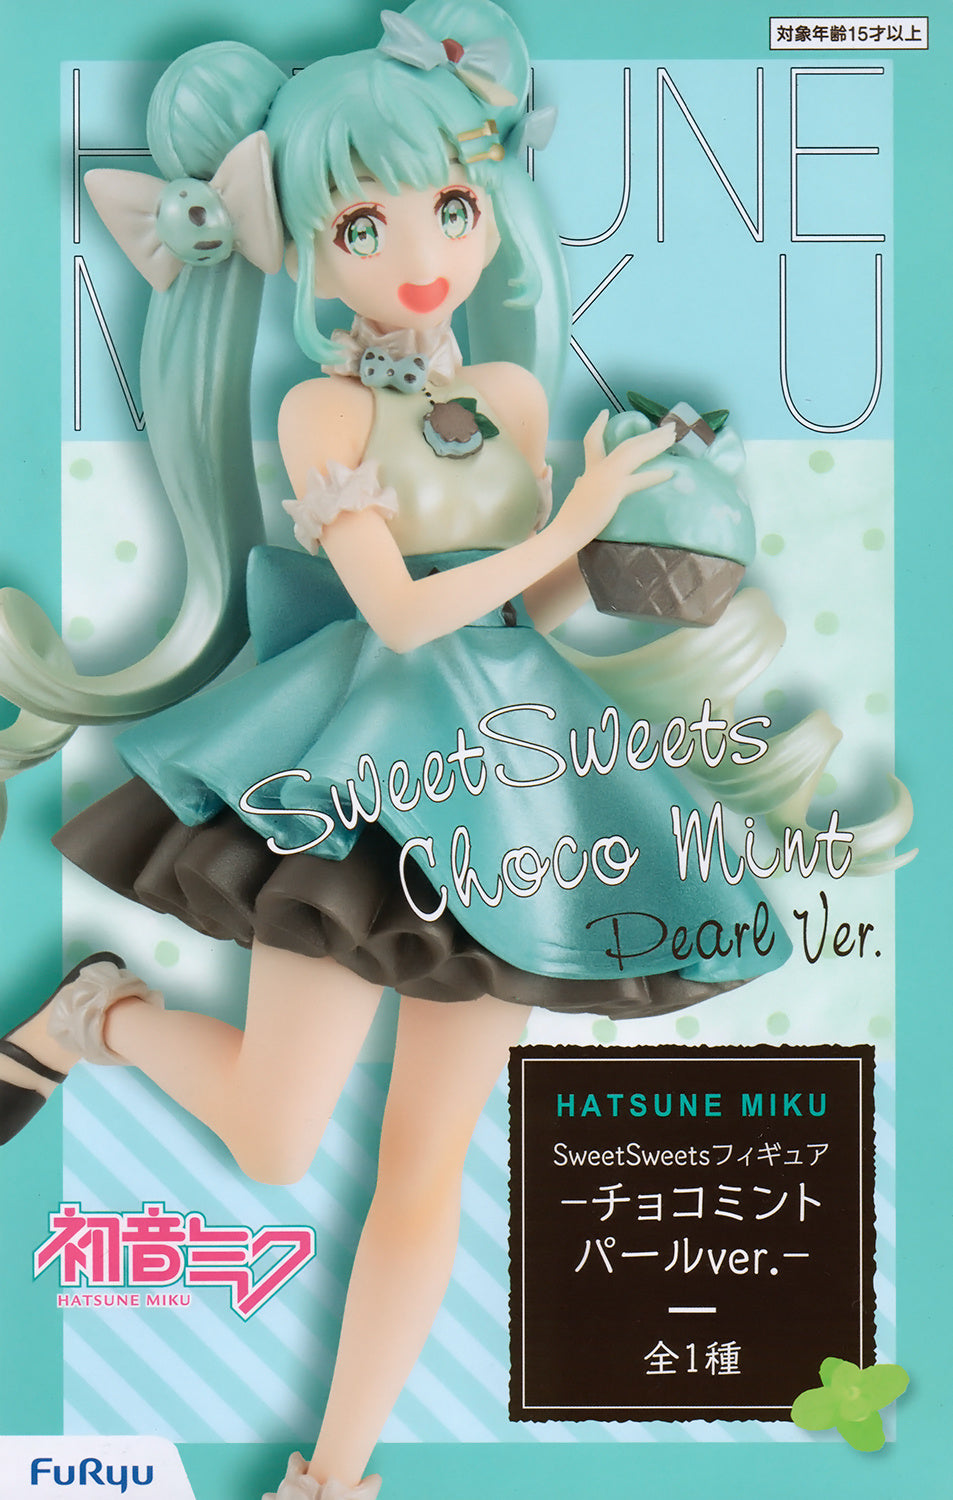 Miku Hatsune Sweet Sweets Figure Chocolate Mint Pearl Ver.